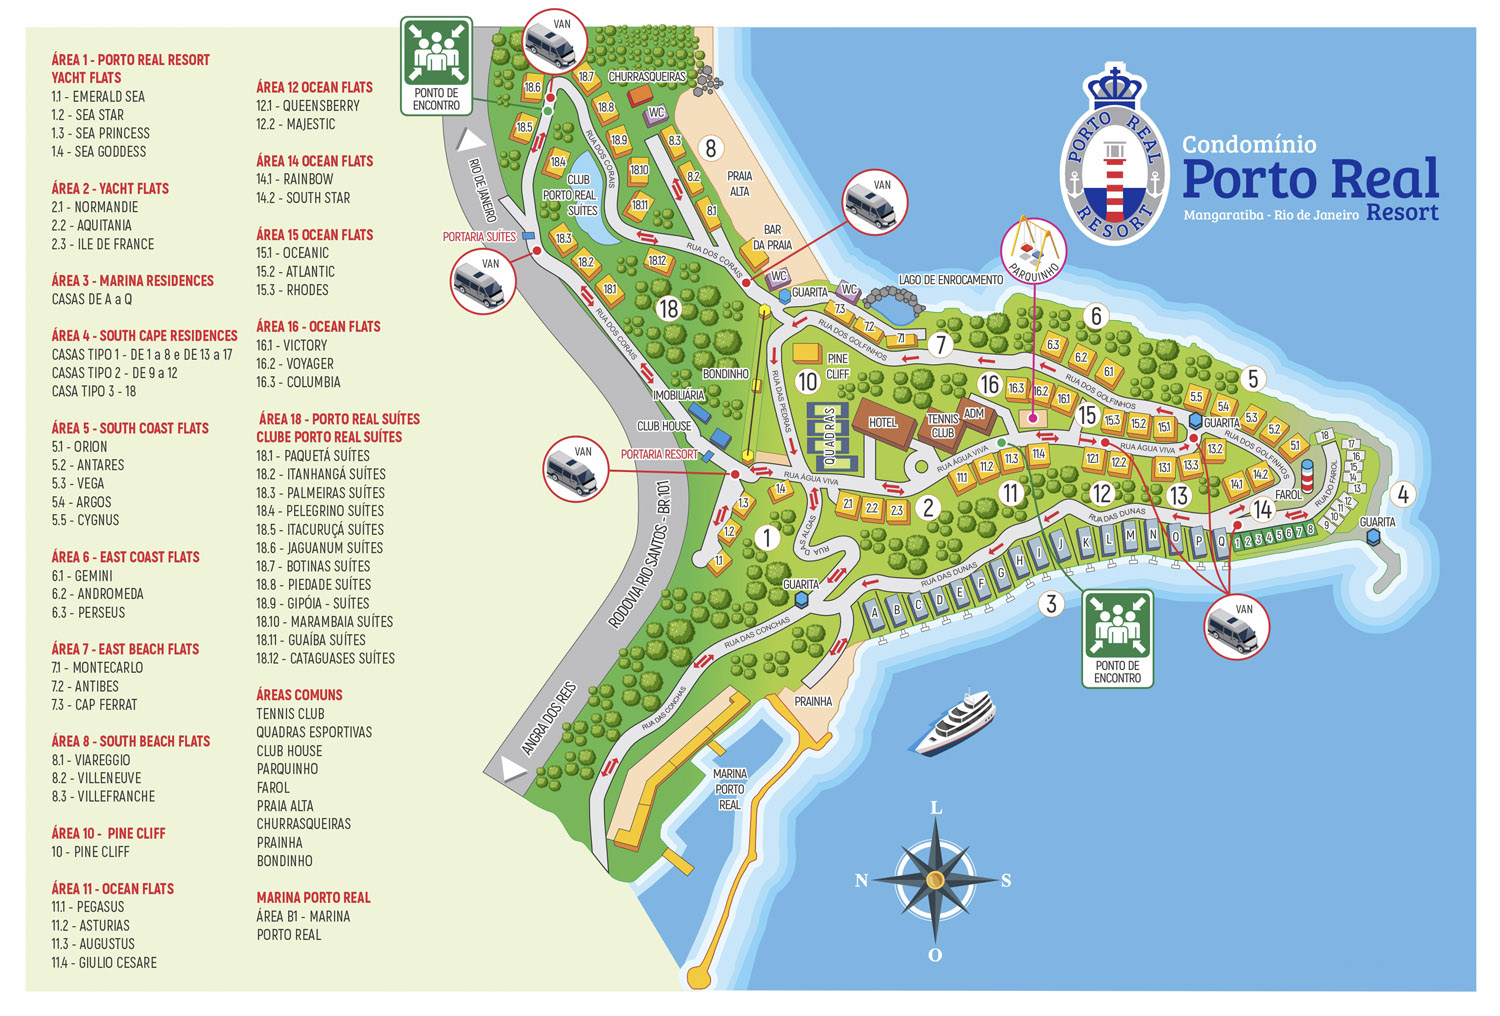 Mapa do Condomínio Porto Real Resort